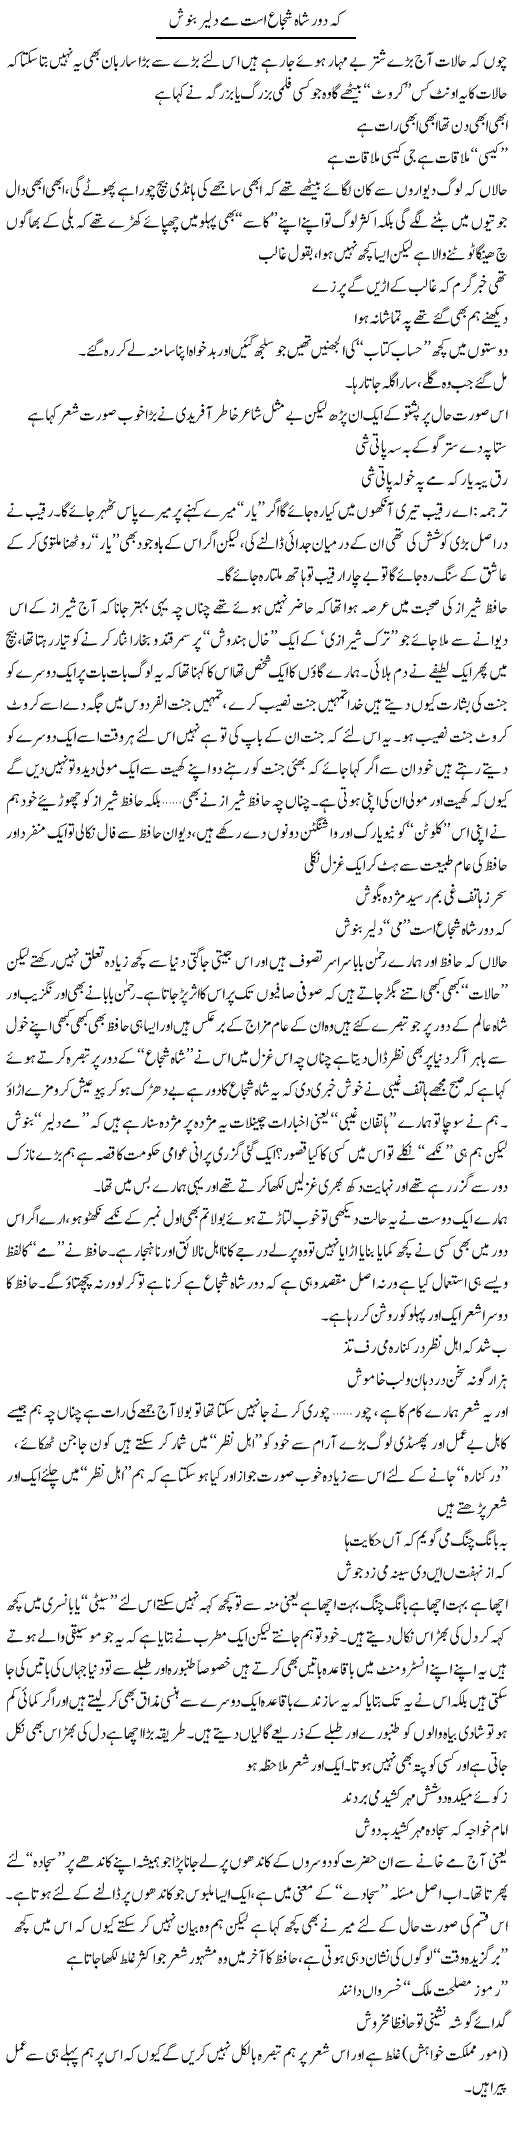 Shah Shuja Express Column Saadullah Barq 14 January 2011